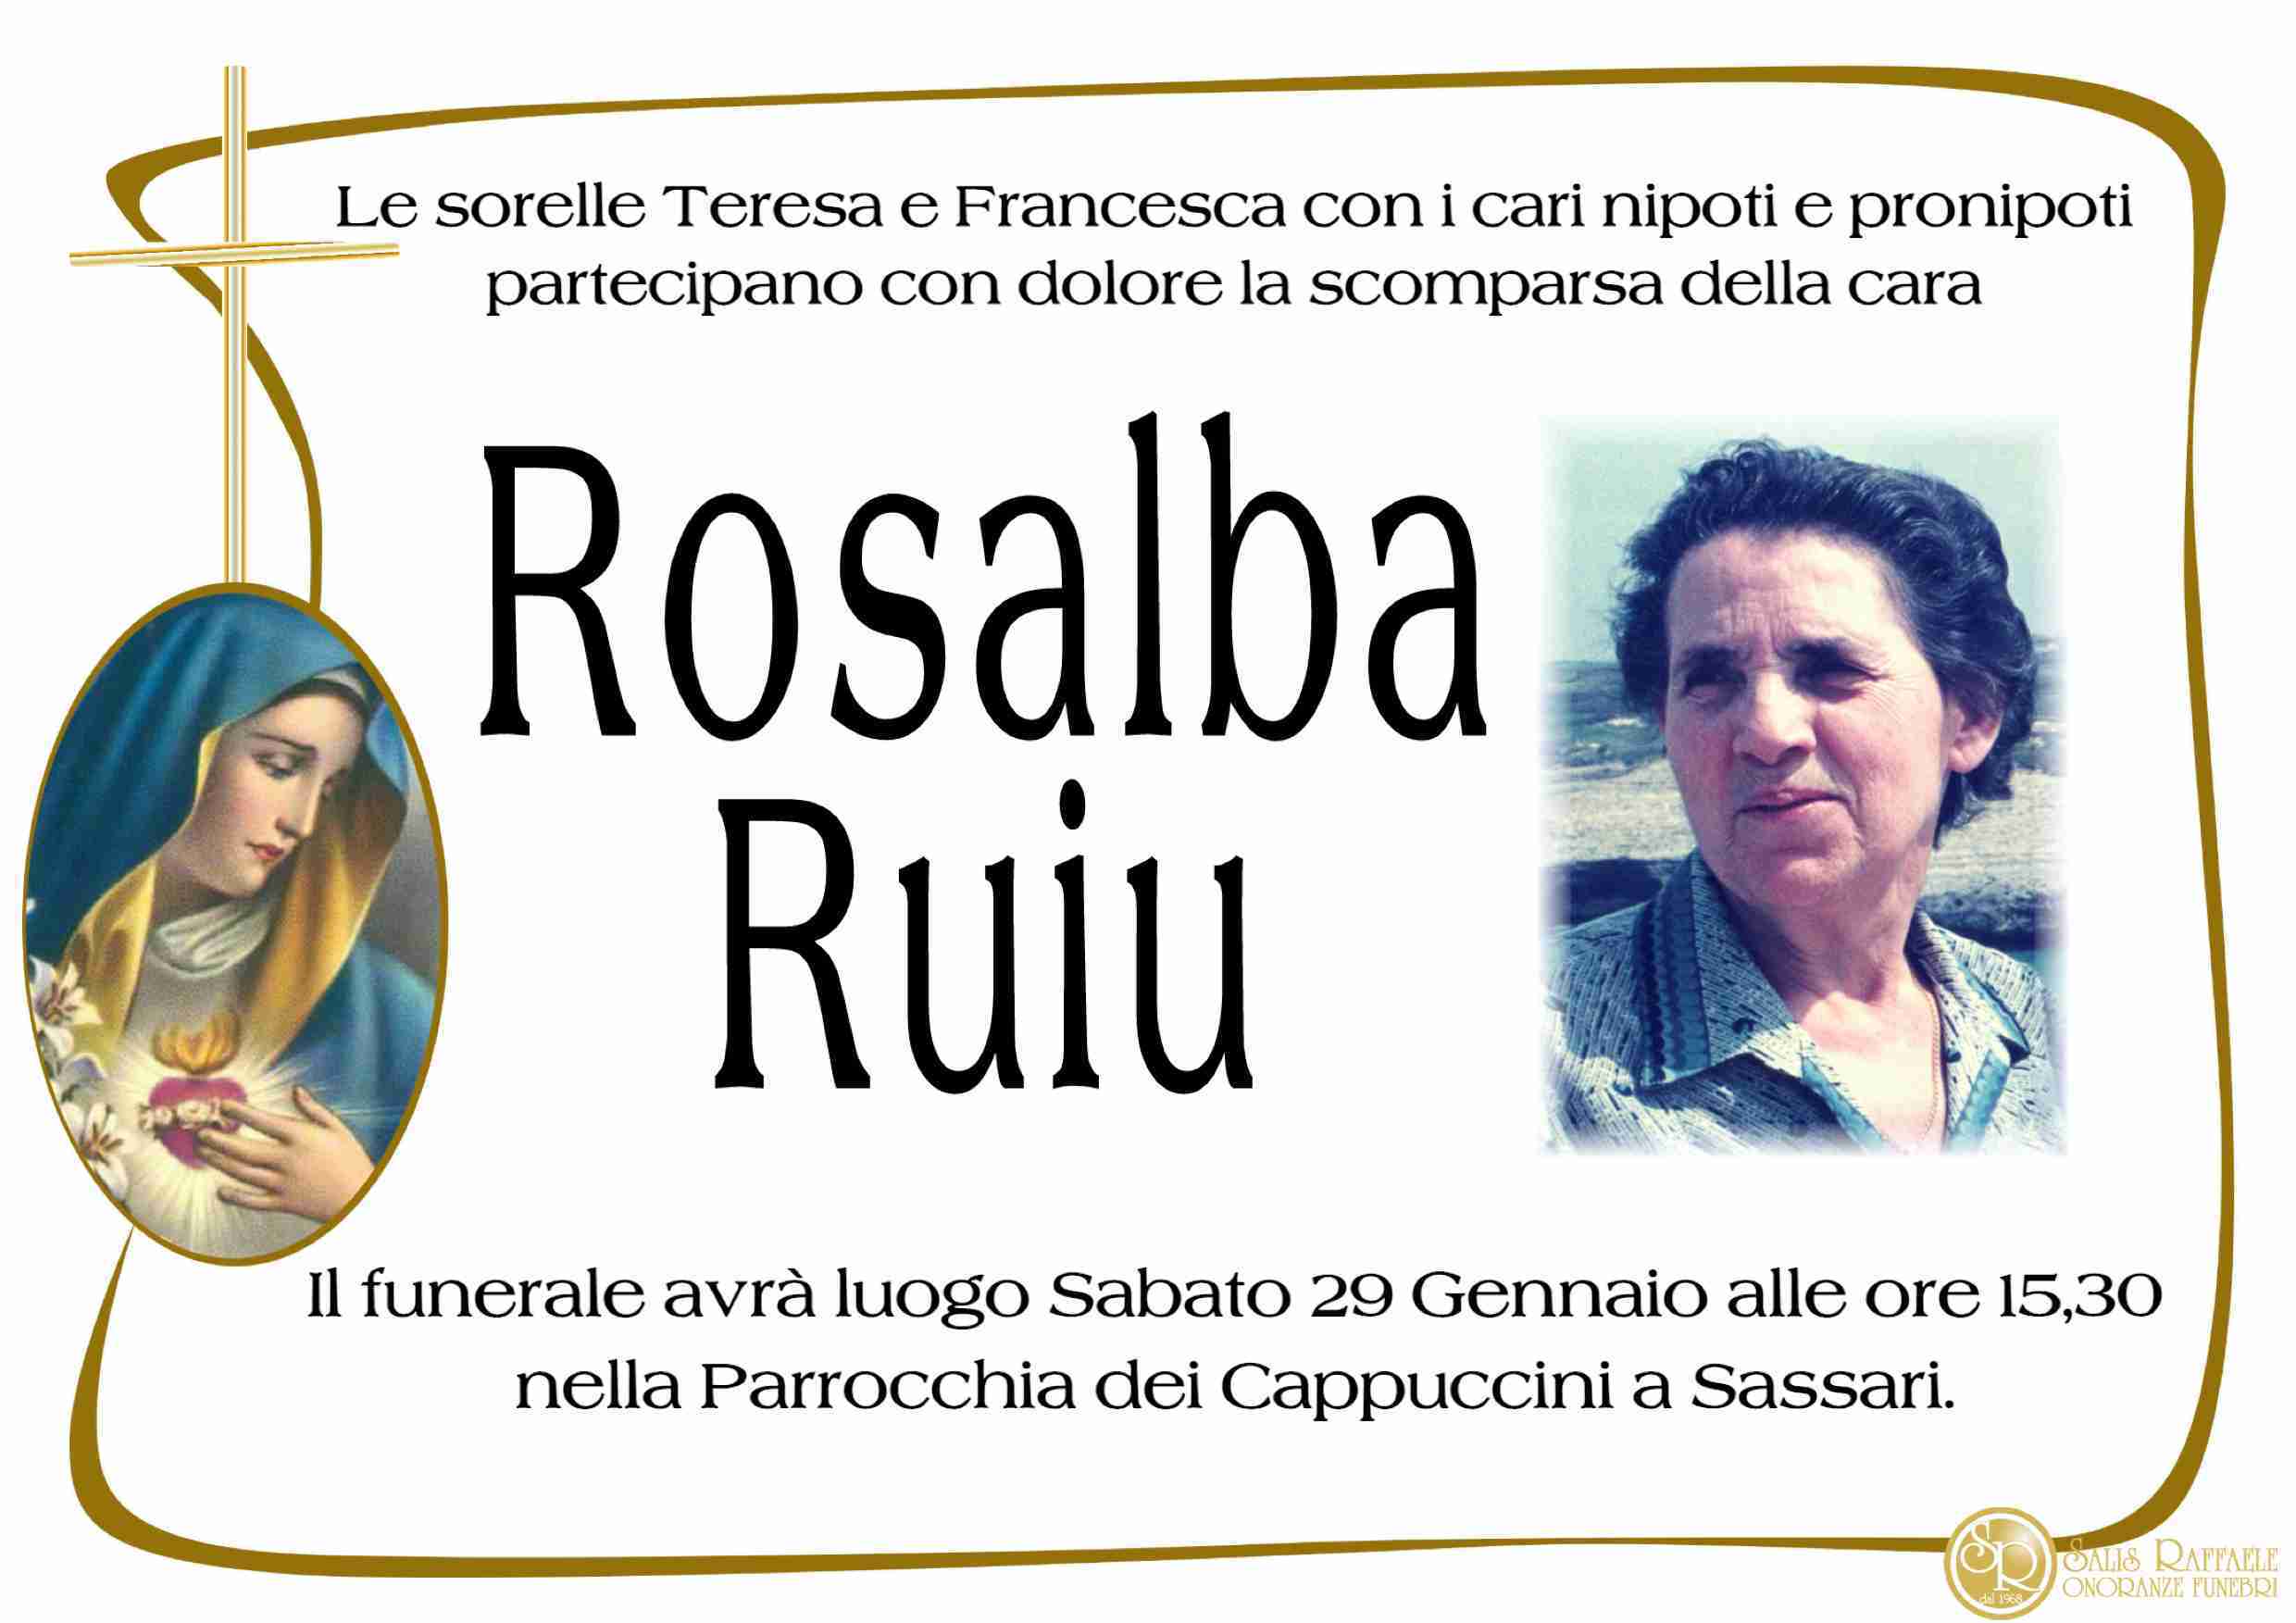 Rosalba Ruiu